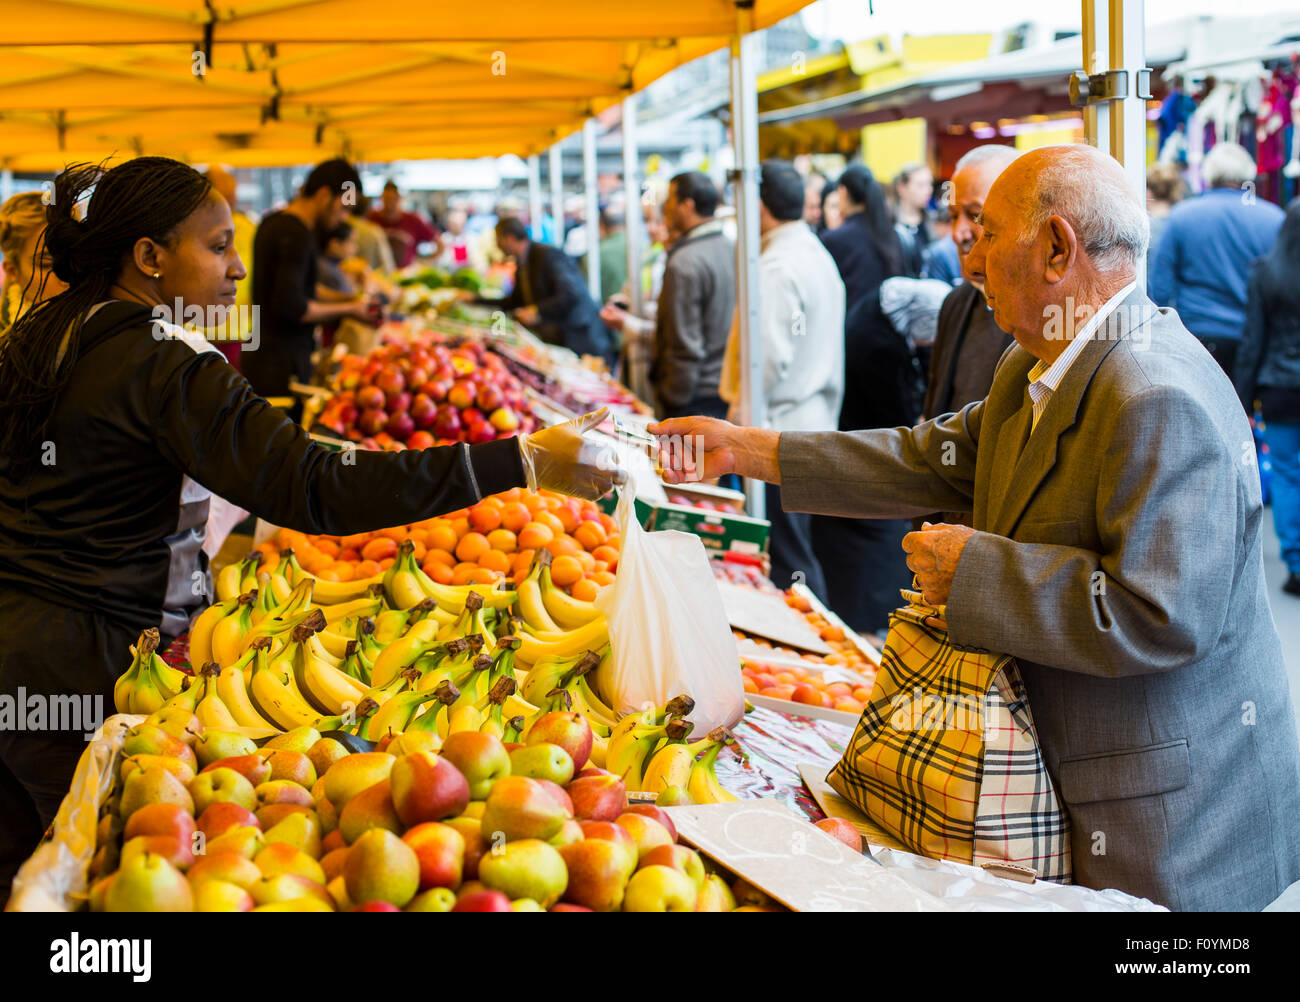 La Batte Sunday market in Liege, Belgium Stock Photo